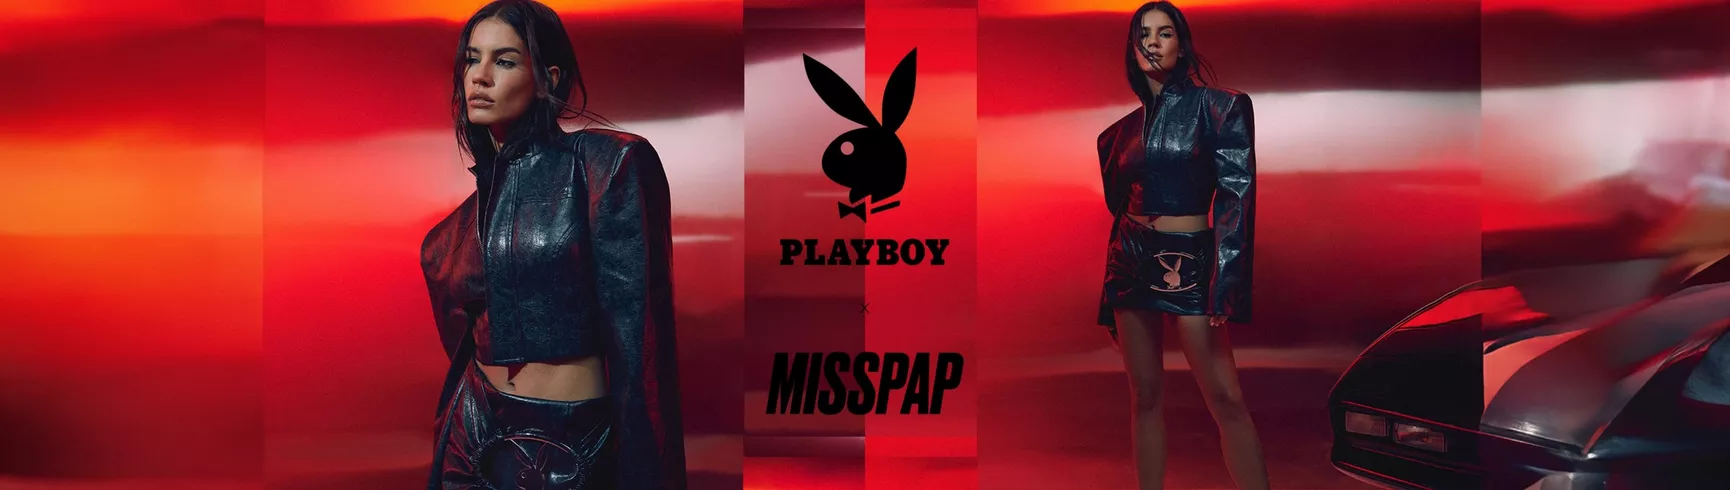 Misspap Playboy